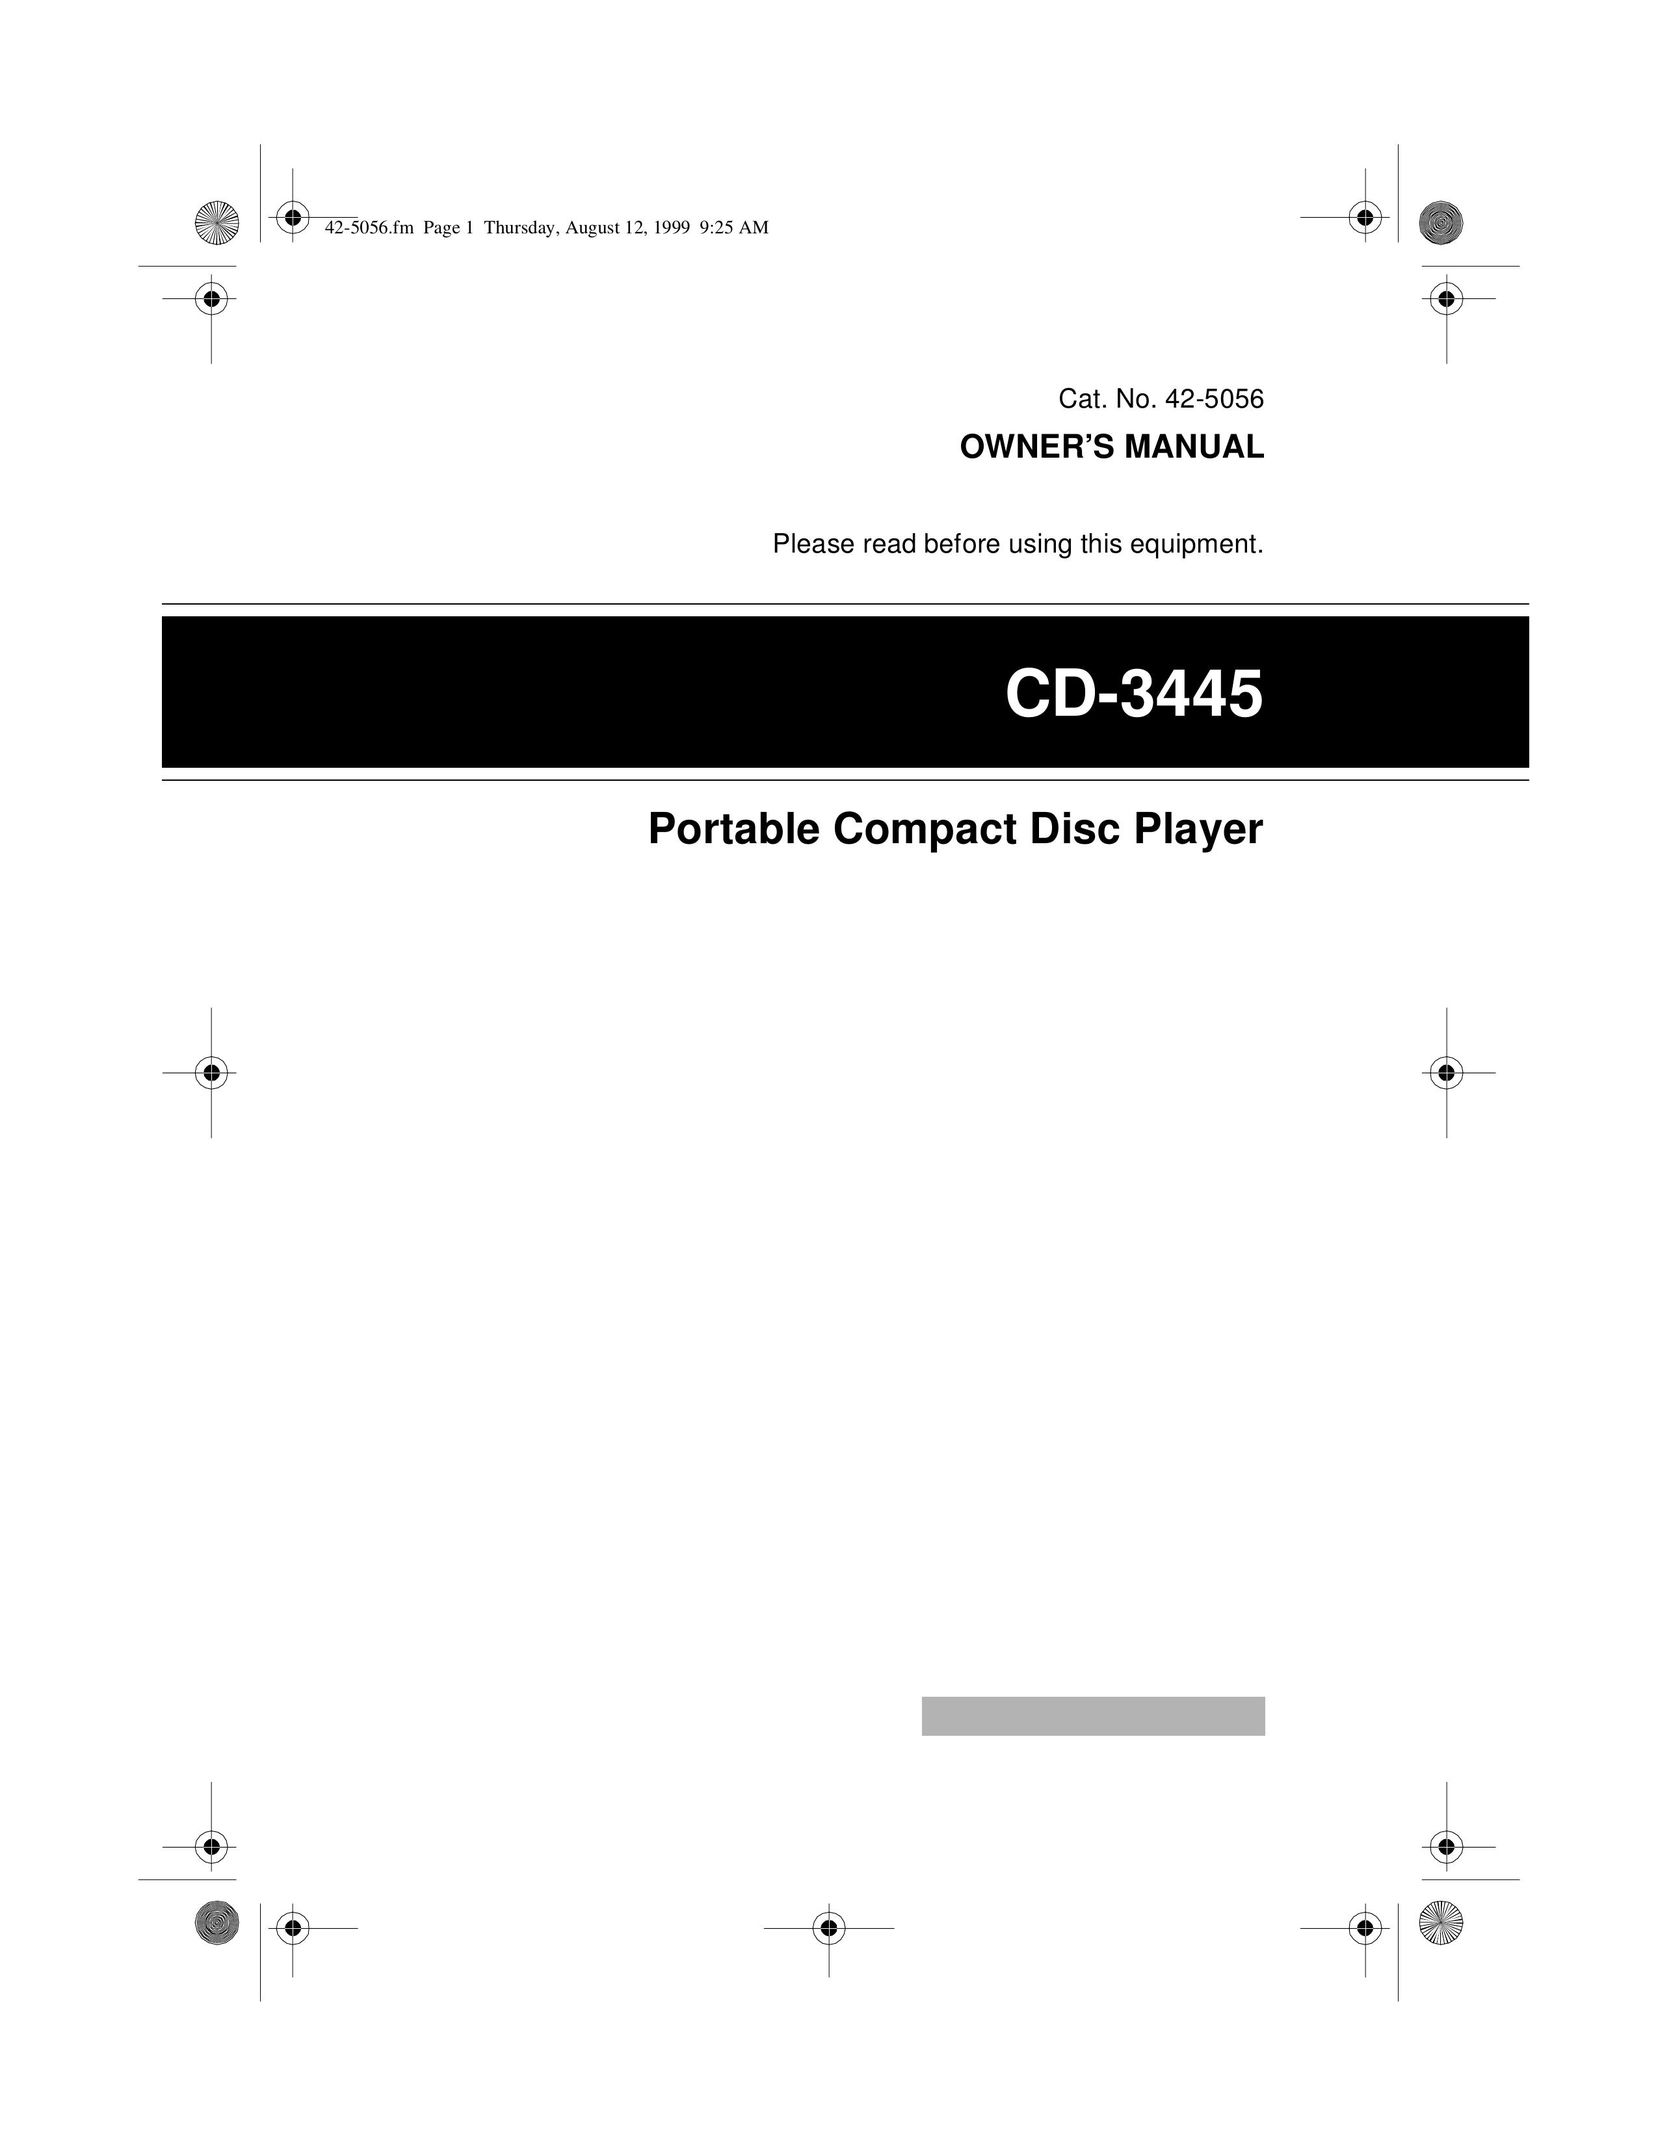 Radio Shack CD-3445 Portable CD Player User Manual